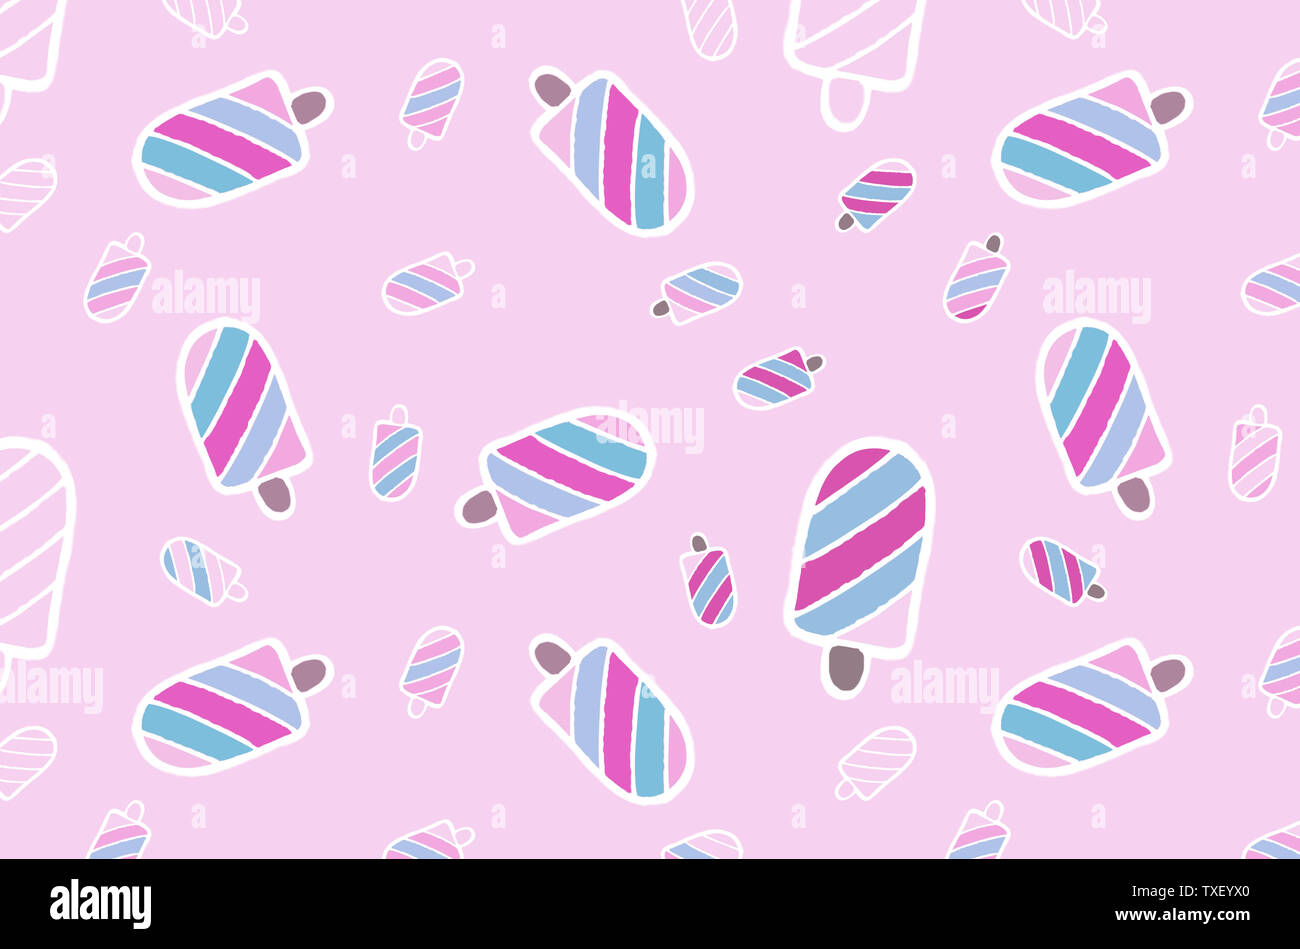 15 Popsicle Backgrounds  WallpaperSafari